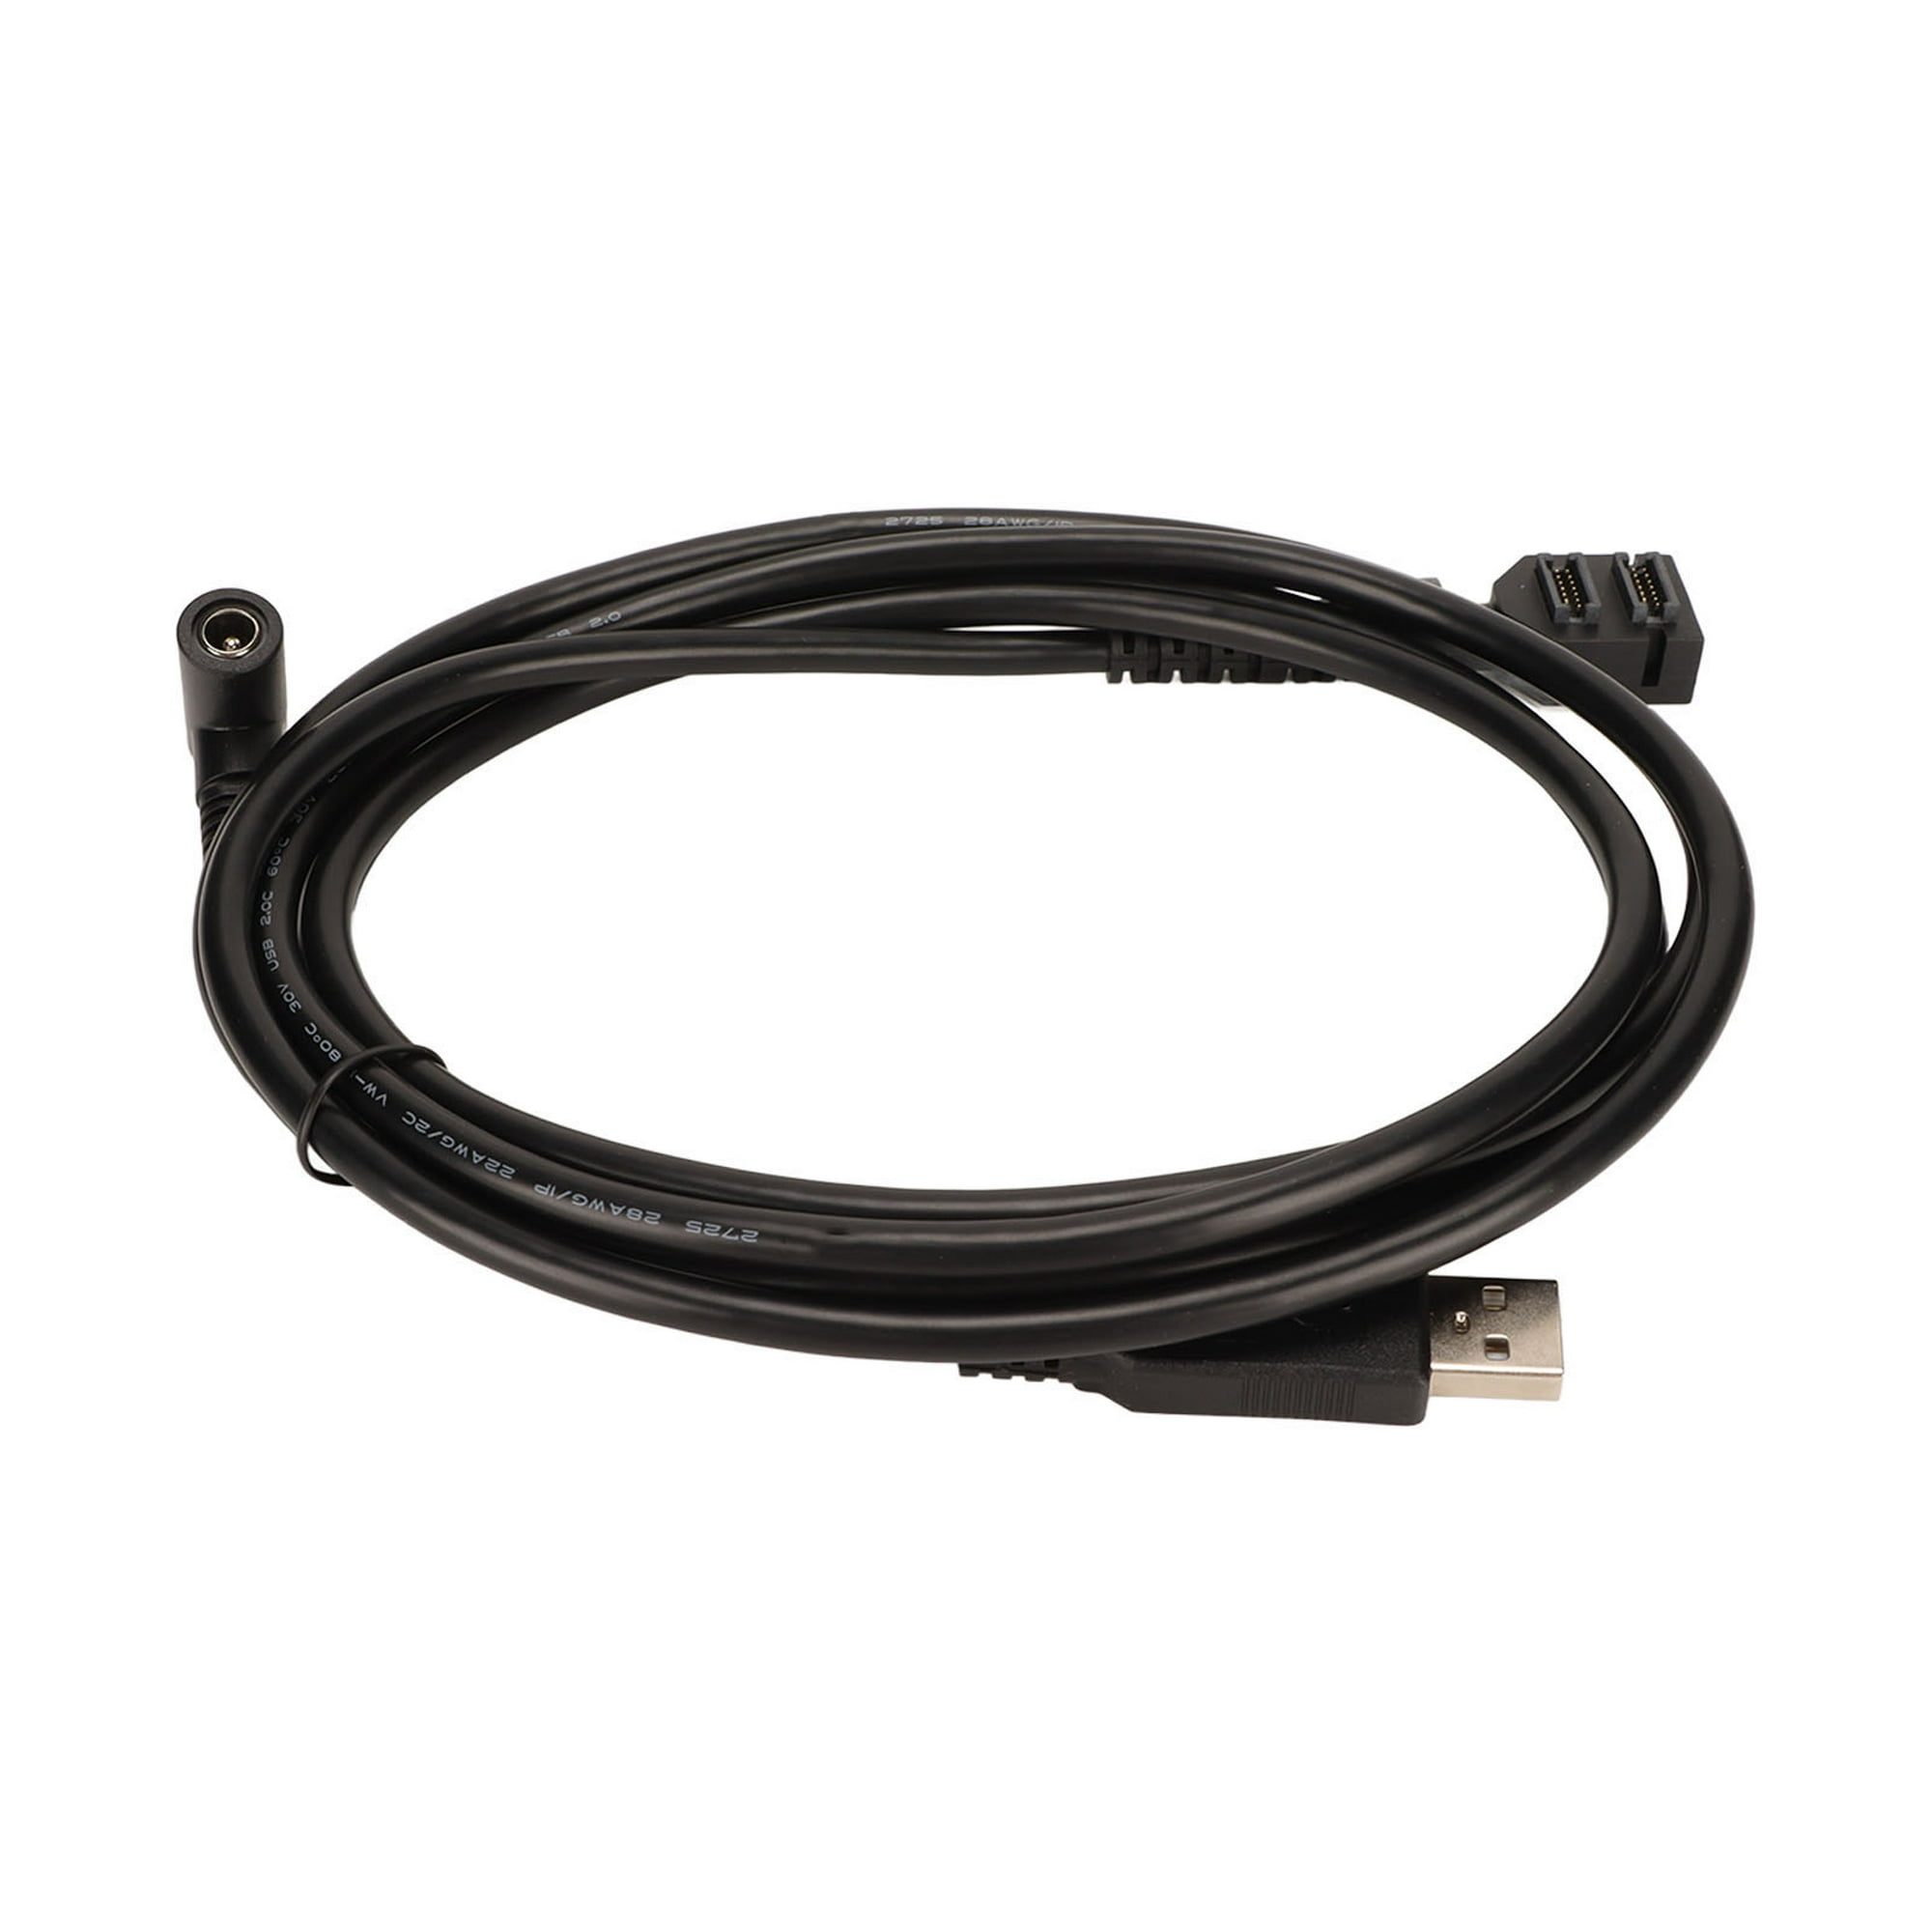 Cable USB - Extension MANHATTAN 3 Metros Cable USB Macho Hembra de 3m hasta  12 Mbps Extension